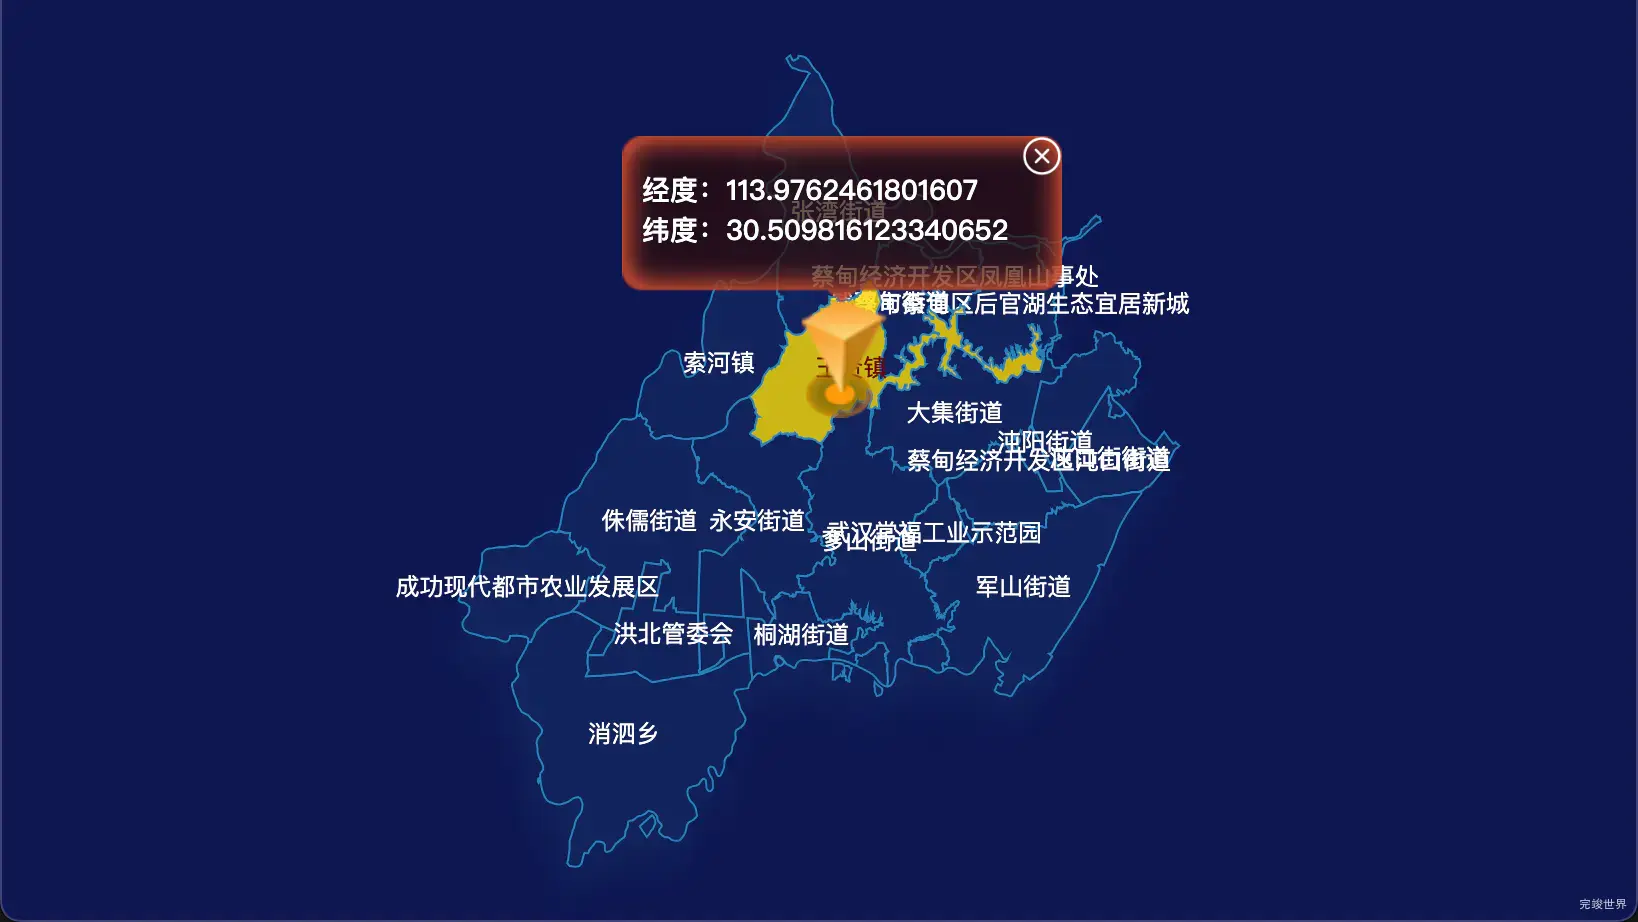 echarts 武汉市蔡甸区geoJson地图点击地图获取经纬度